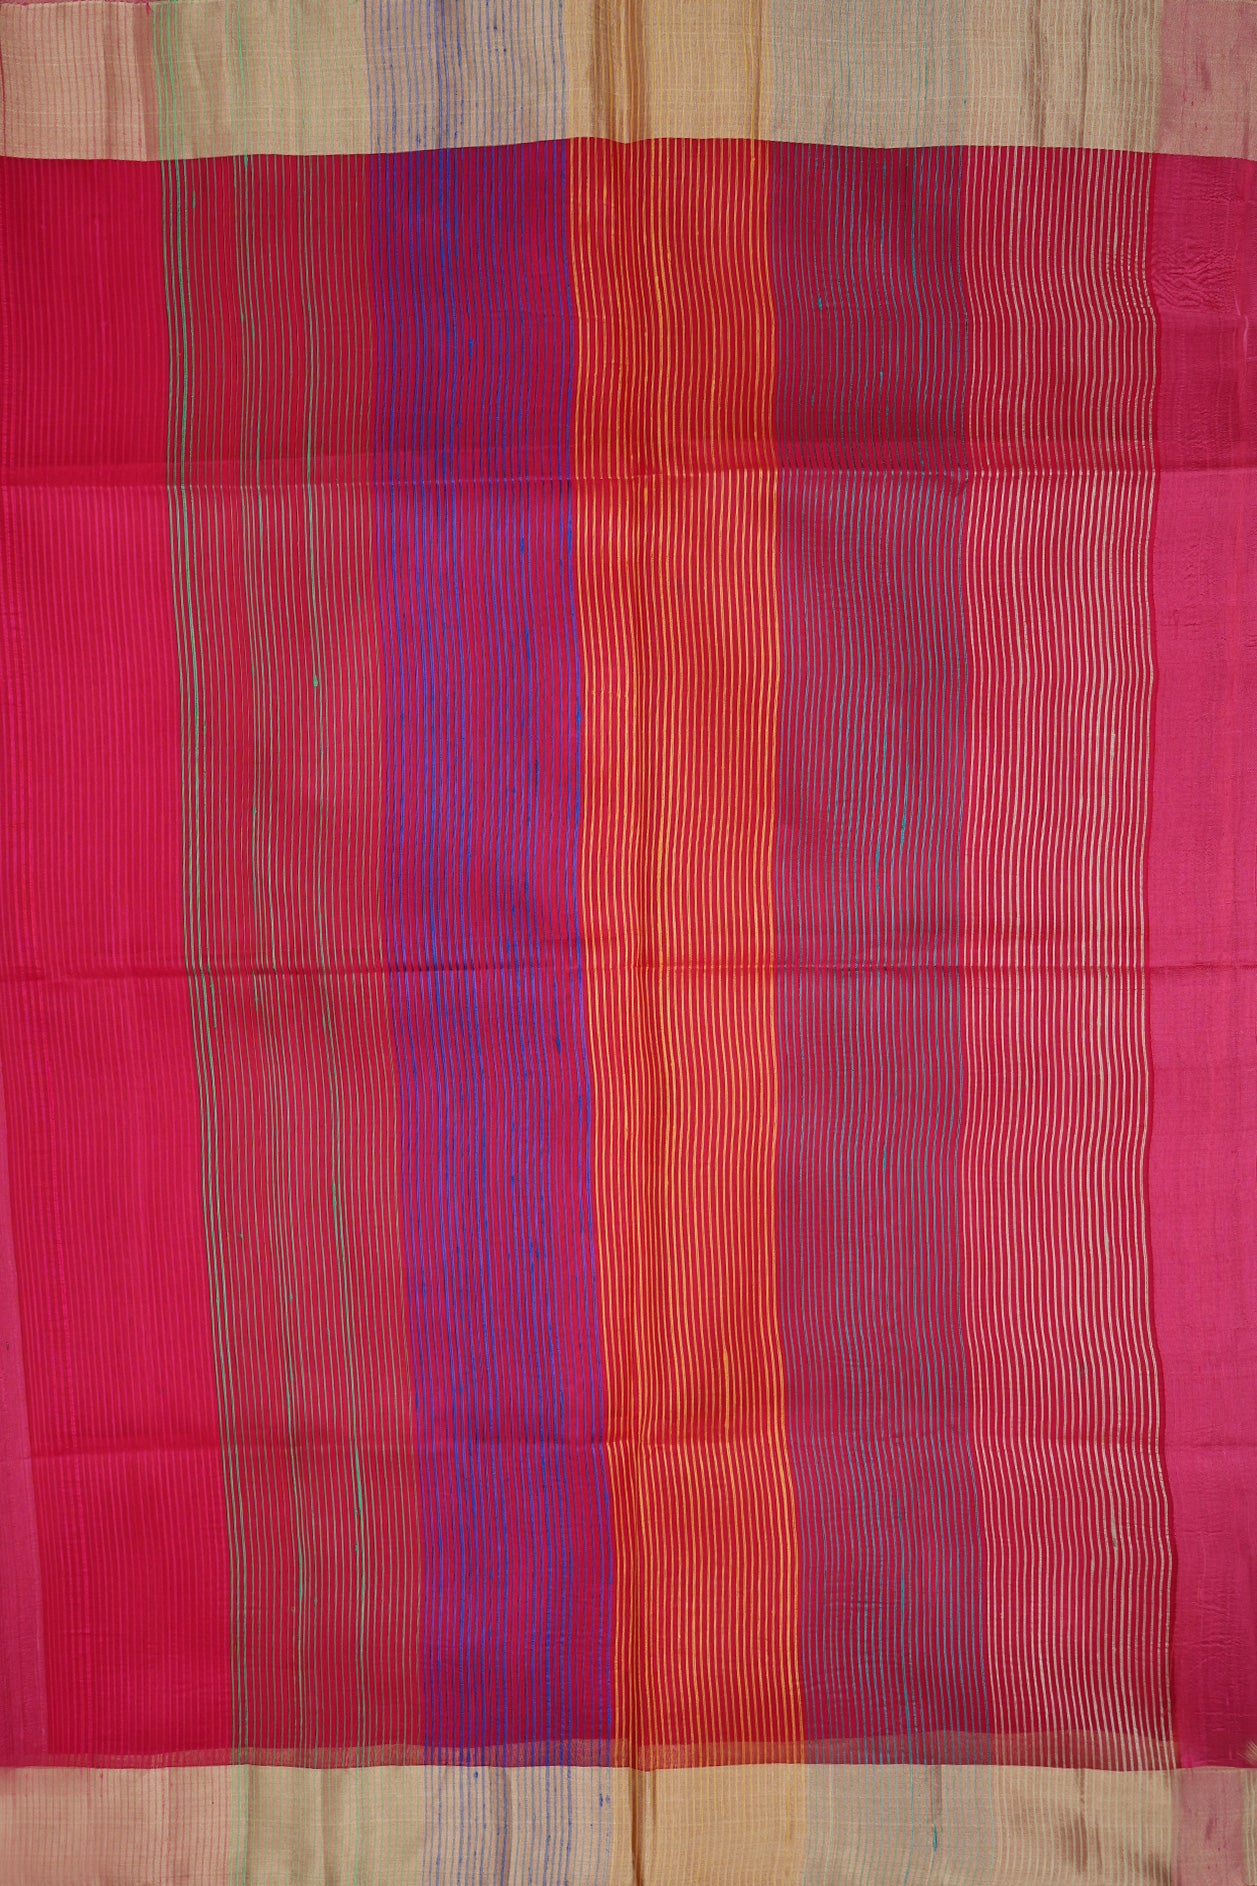 Bavanchi Border Plain Hot Pink Raw Silk Saree